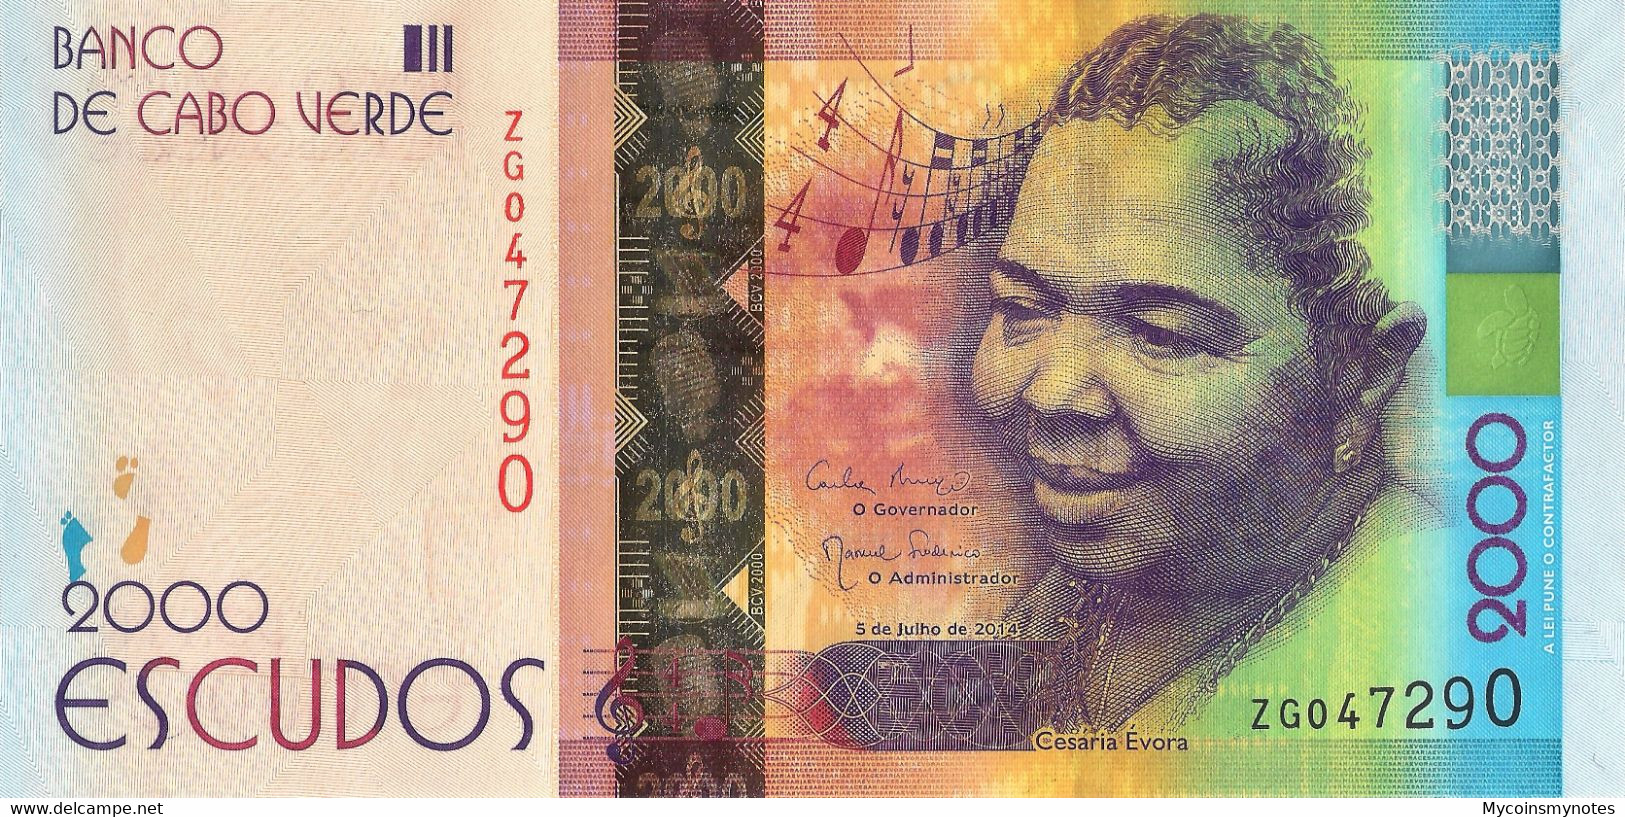 CAPE VERDE 2000 Escudos From 2014, P74, "Z" Replacement Banknote, UNC - Capo Verde